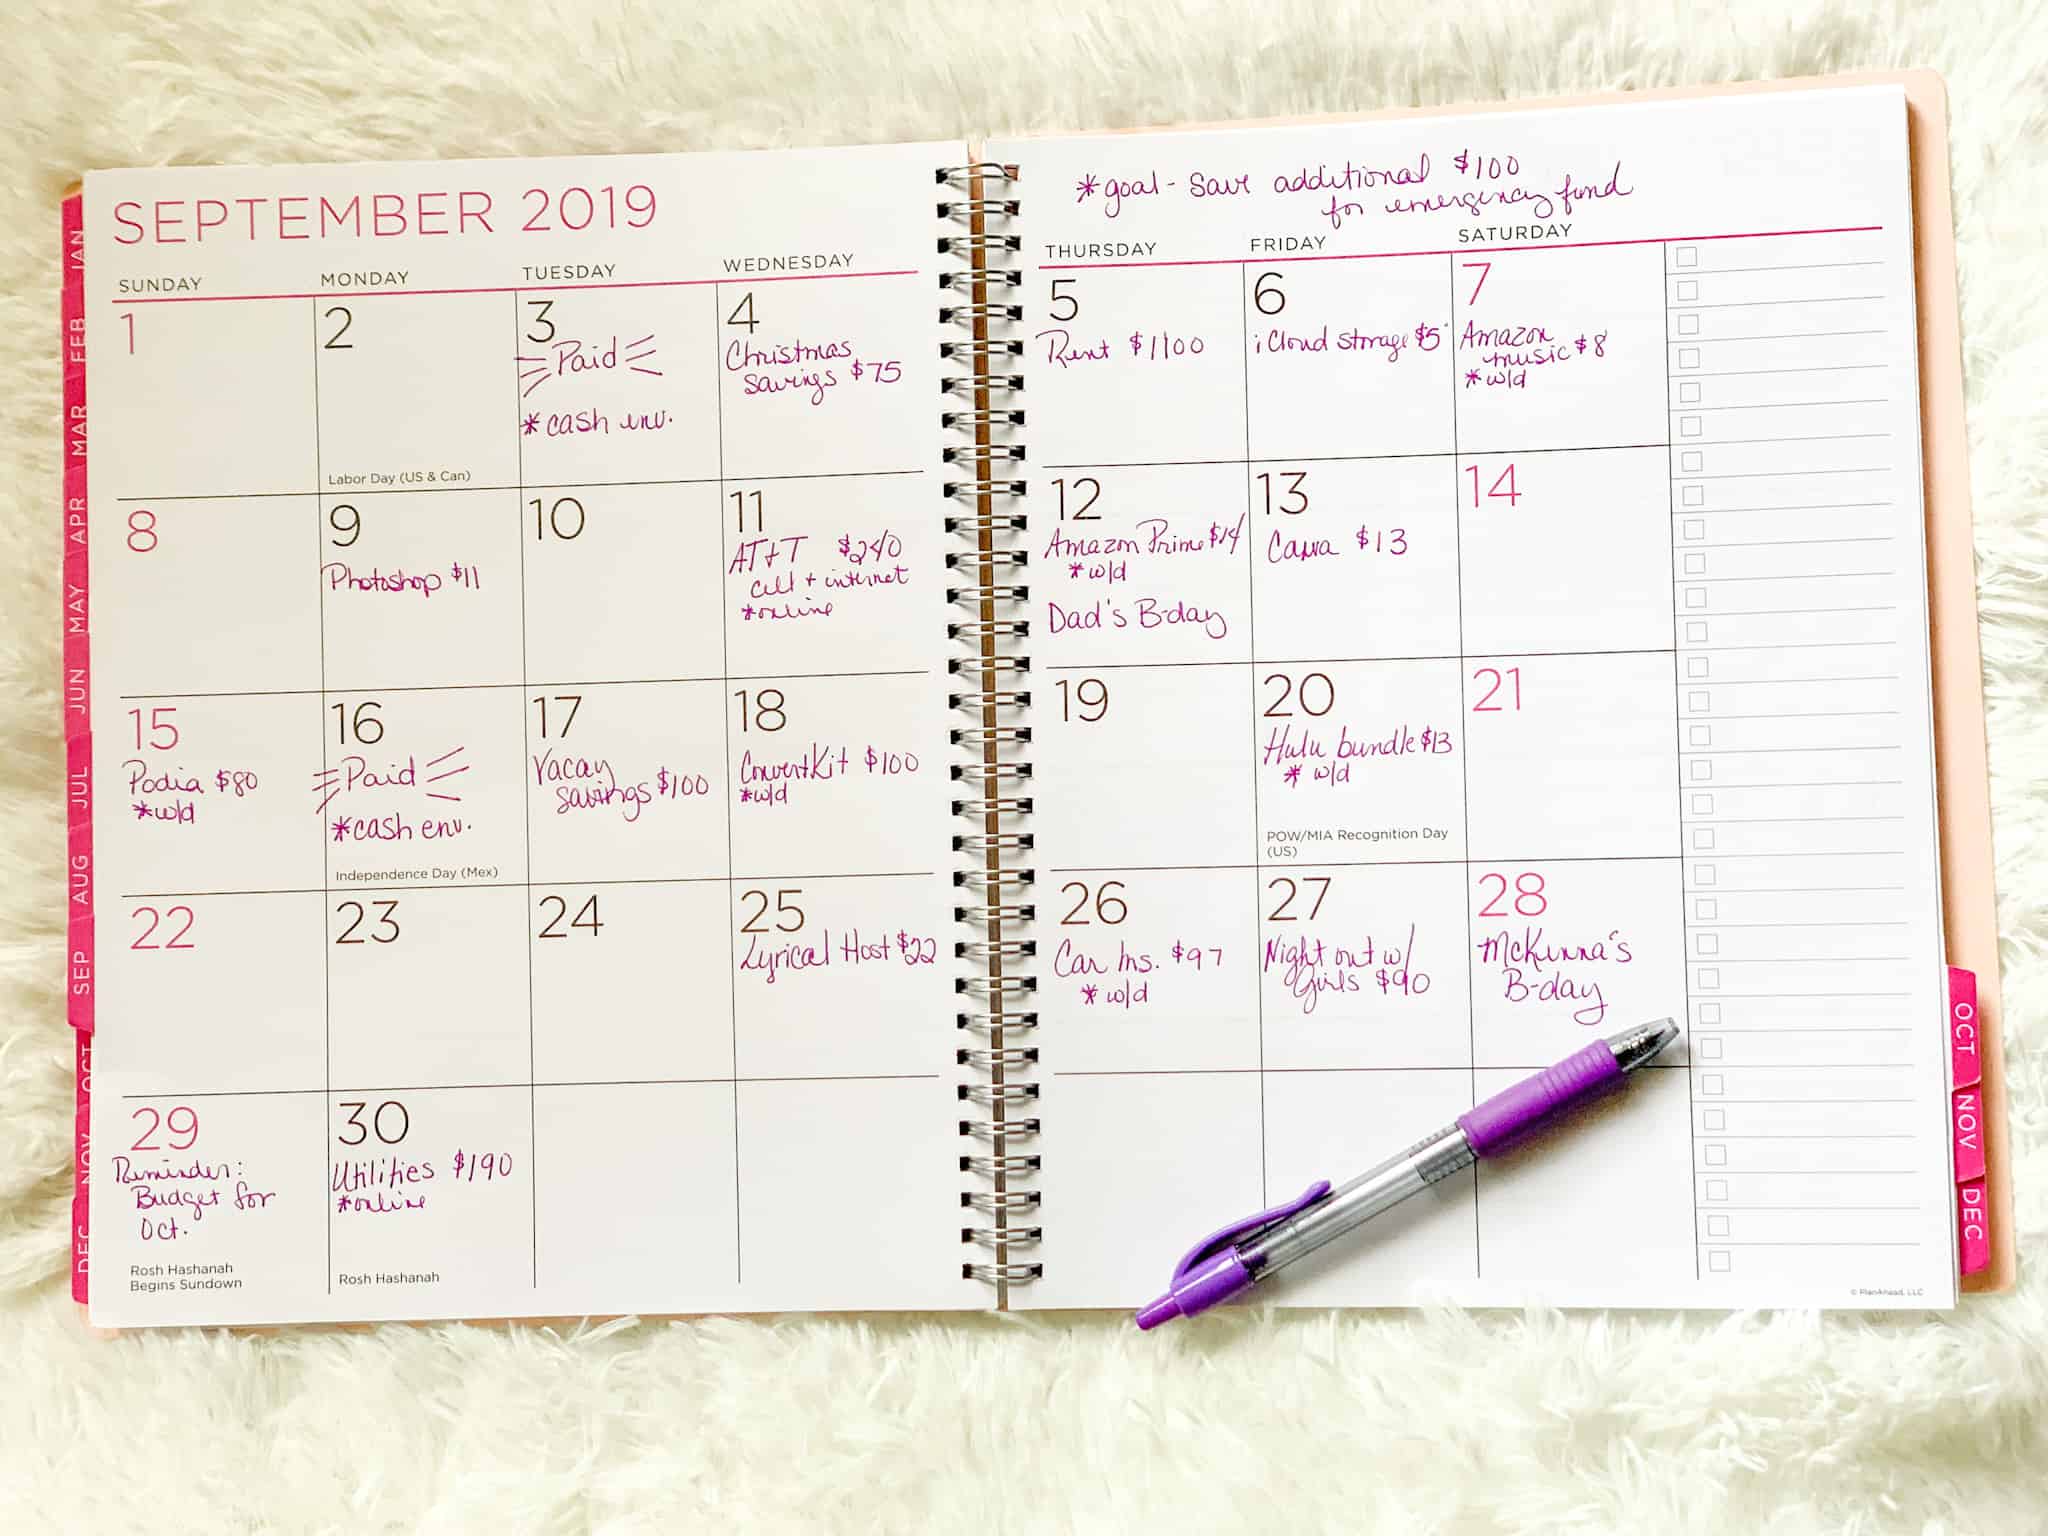 Monthly Budget Calendar handwritten in a planner.